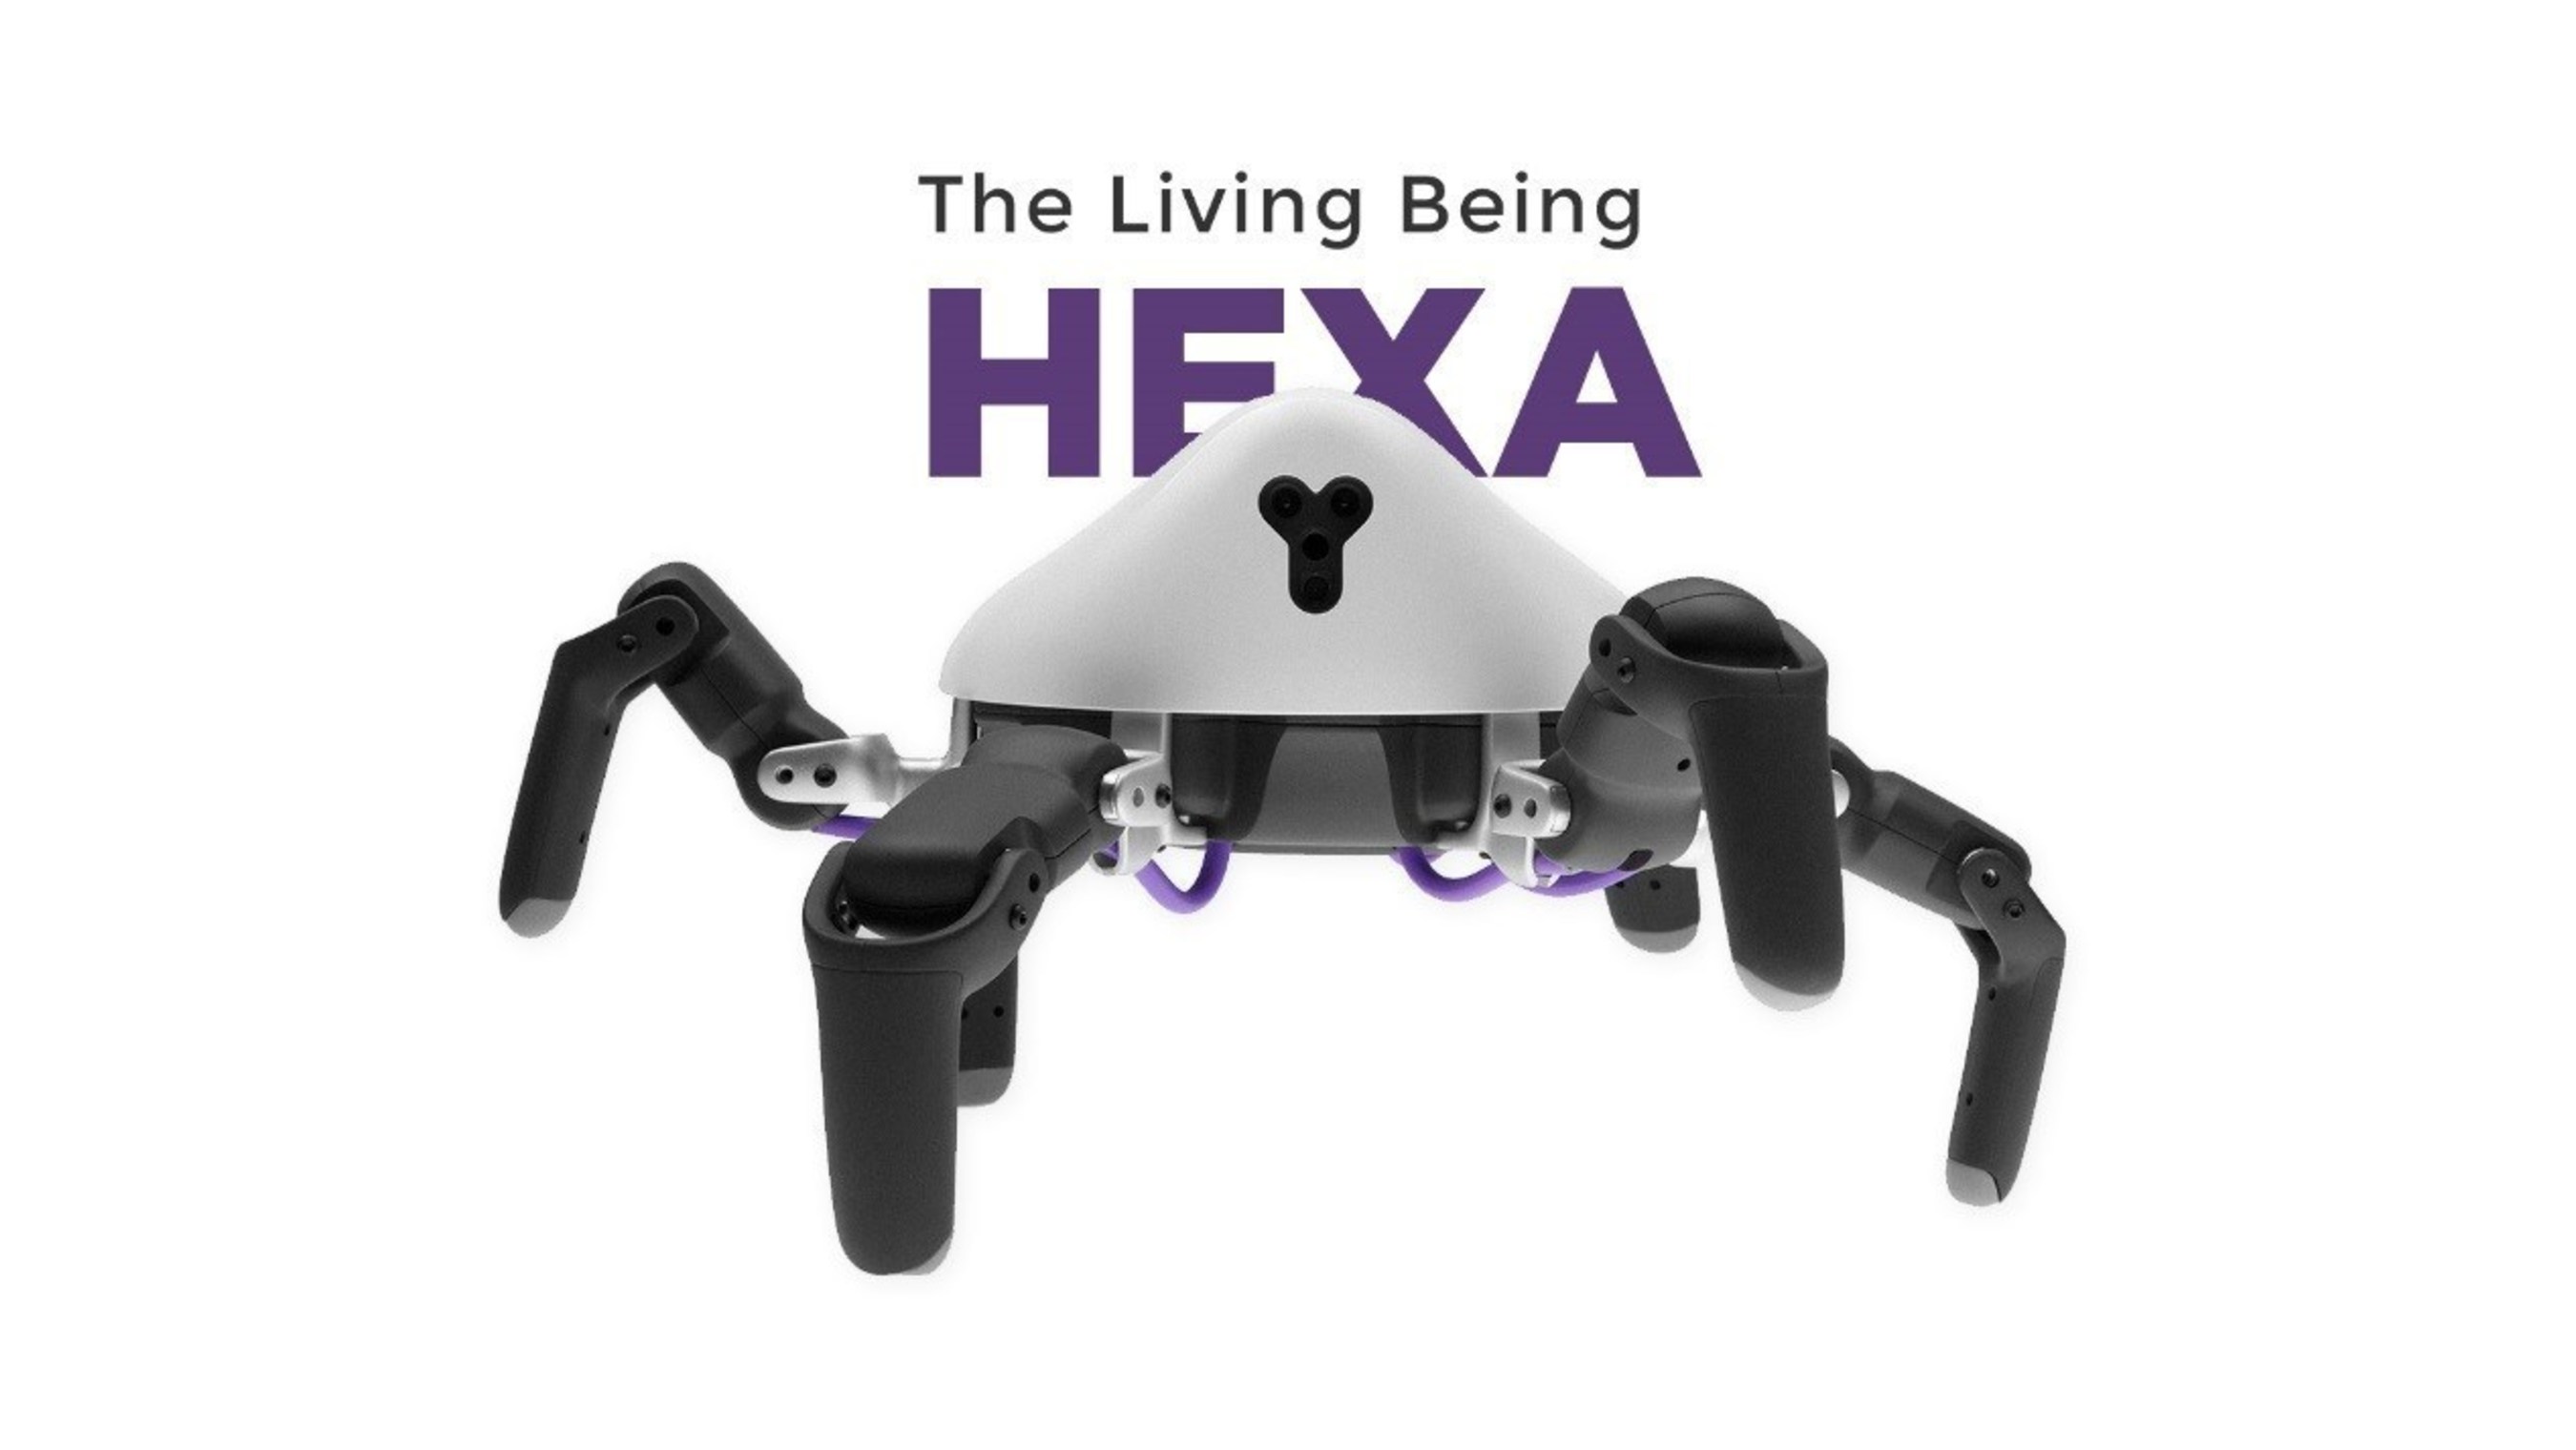 Robot HEXA